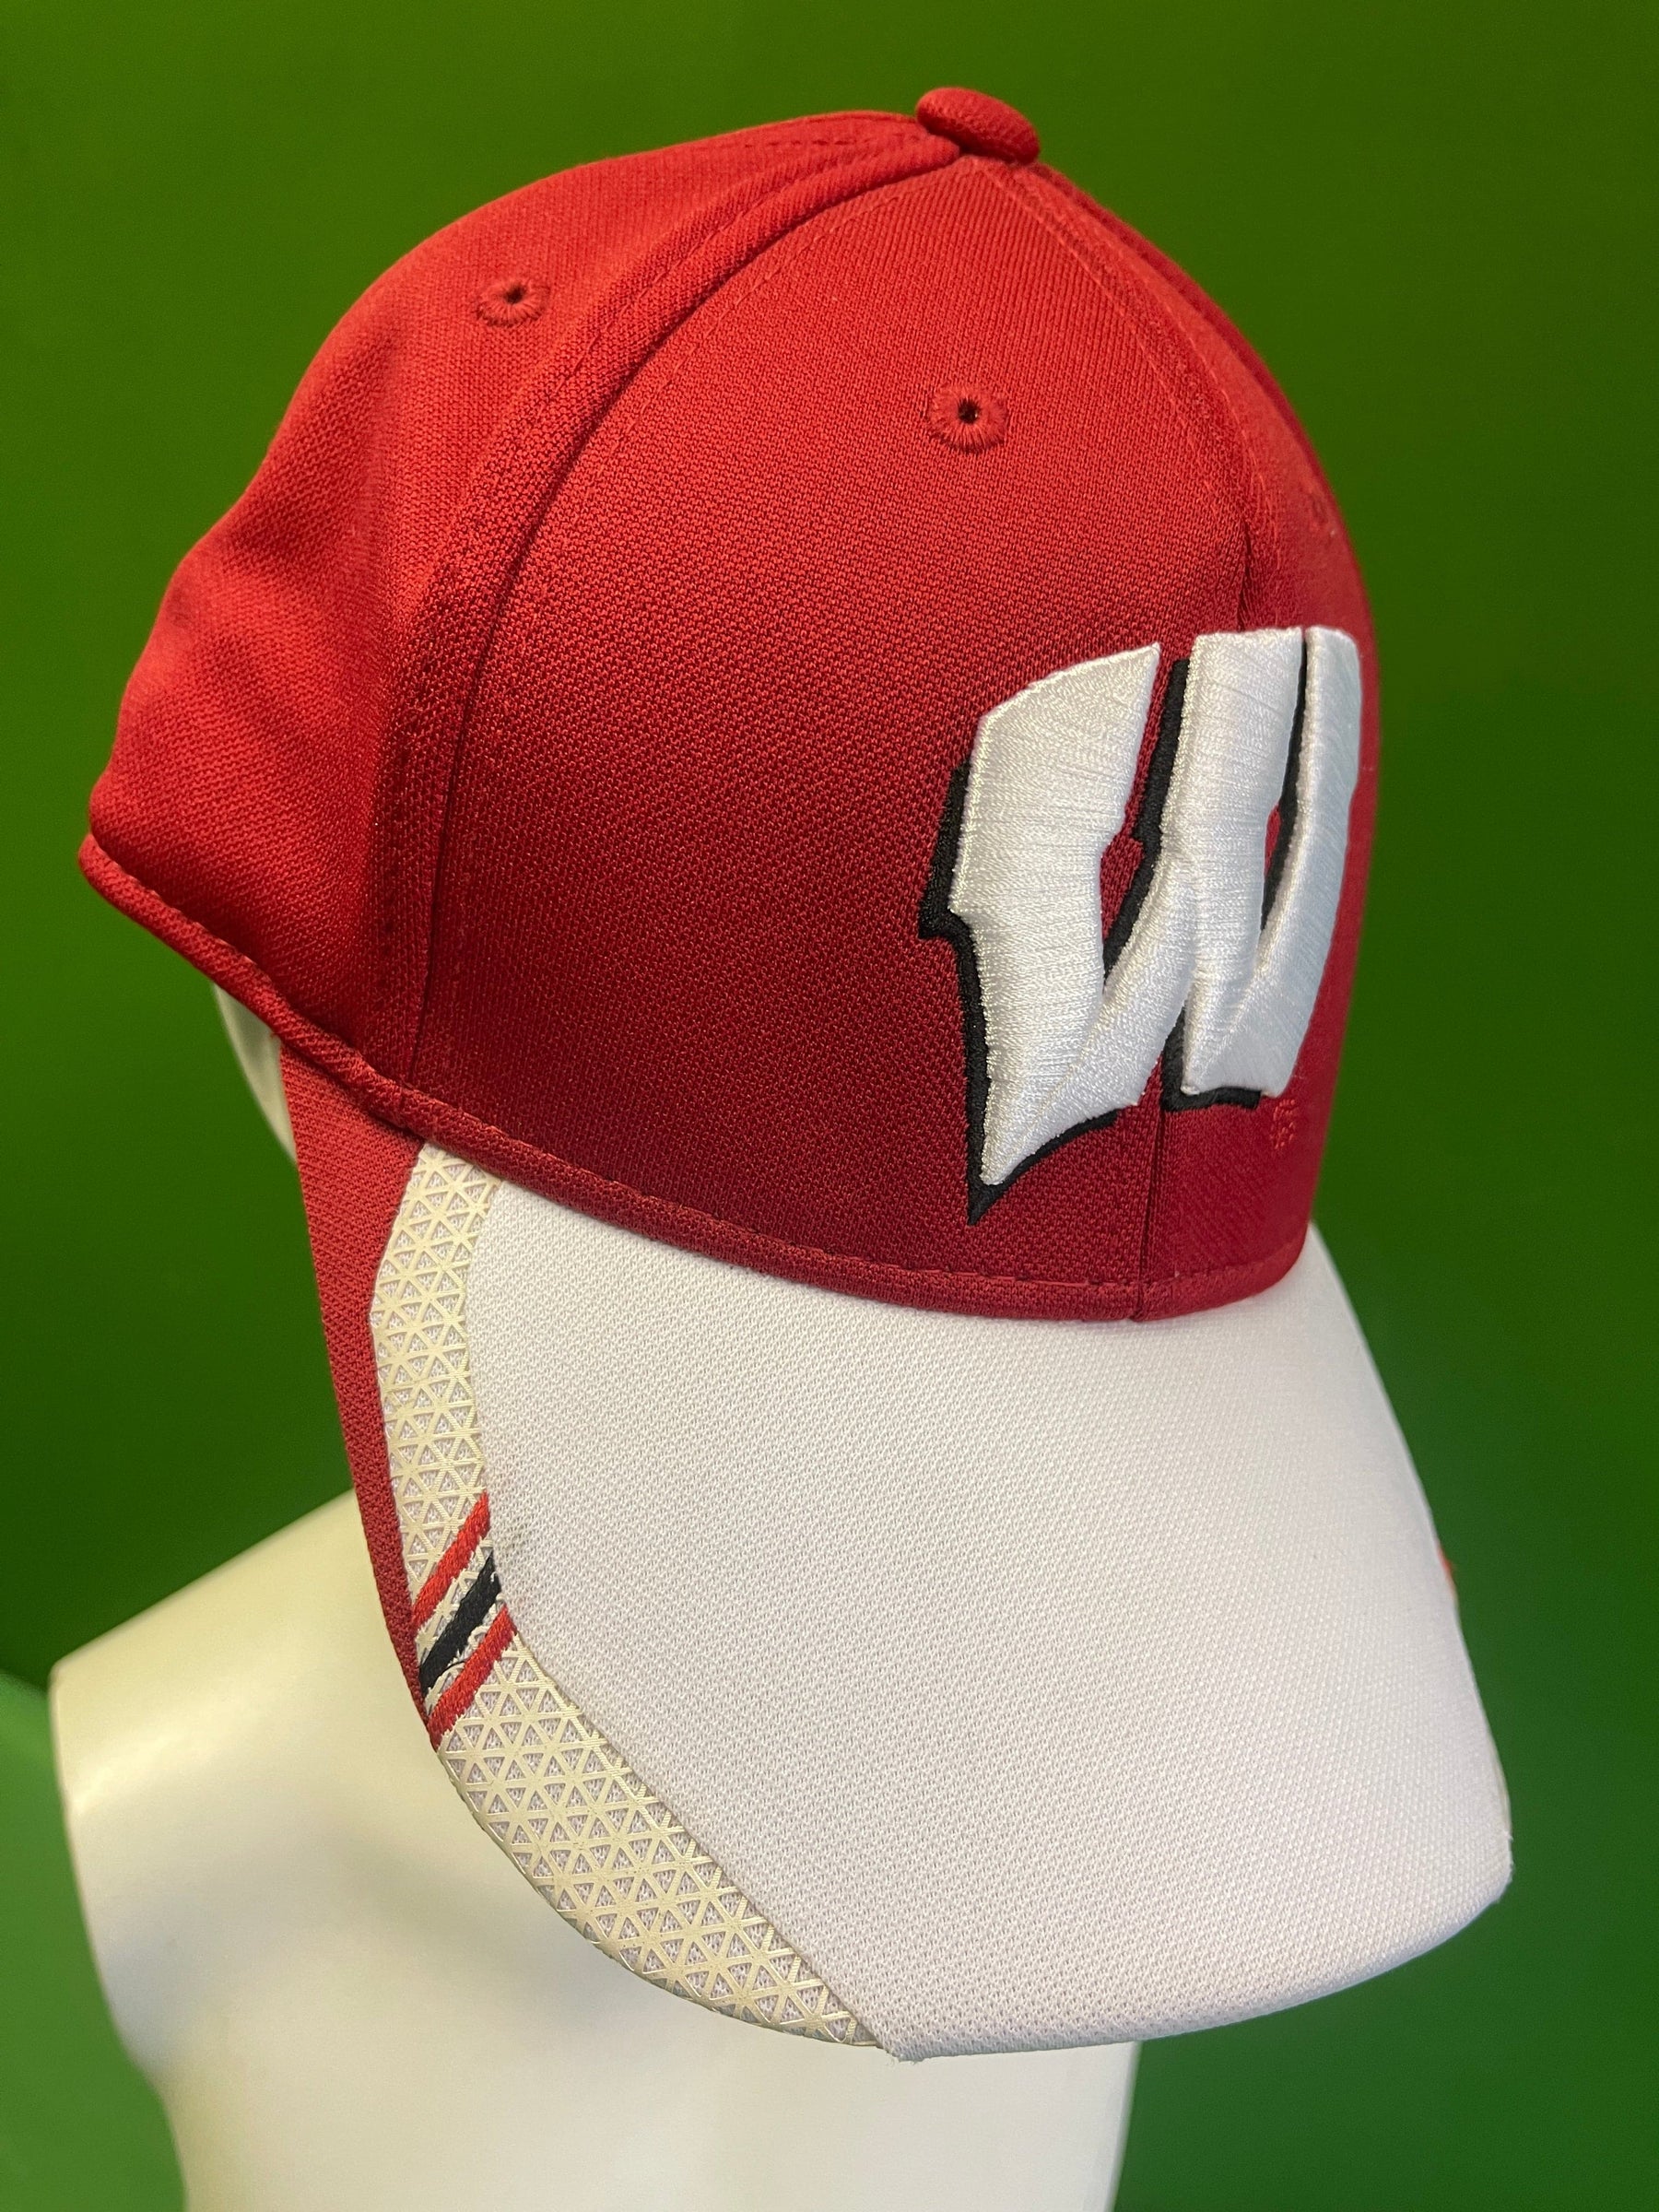 NCAA Wisconsin Badgers Adidas Hat/Cap Large/X-Large